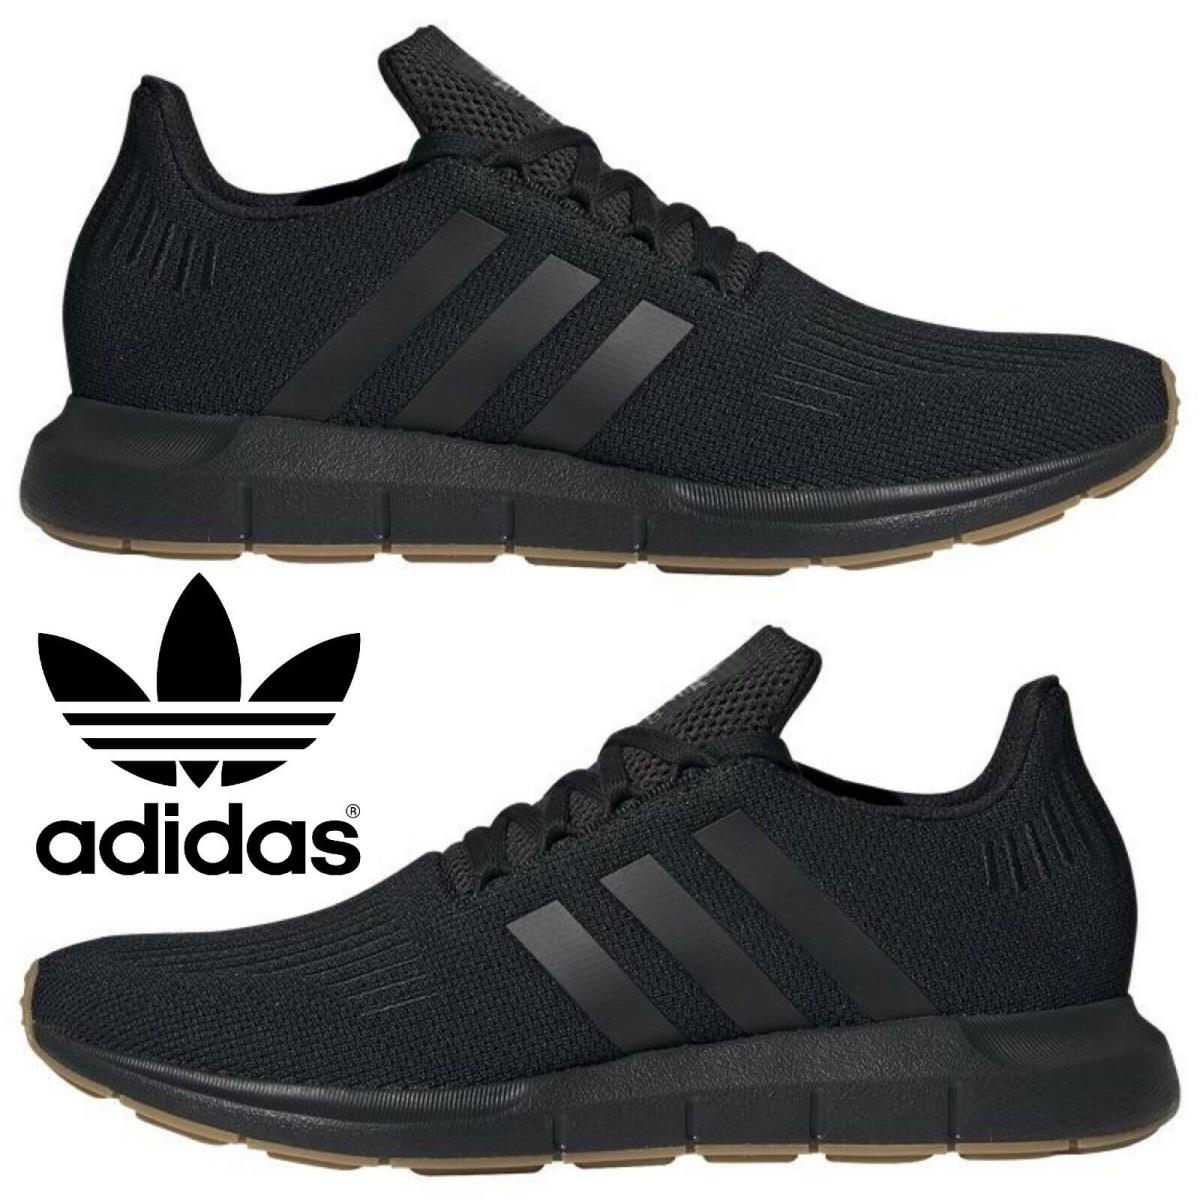 Adidas Originals Swift Run Men`s Sneakers Comfort Casual Shoes Black - Black, Manufacturer: Black